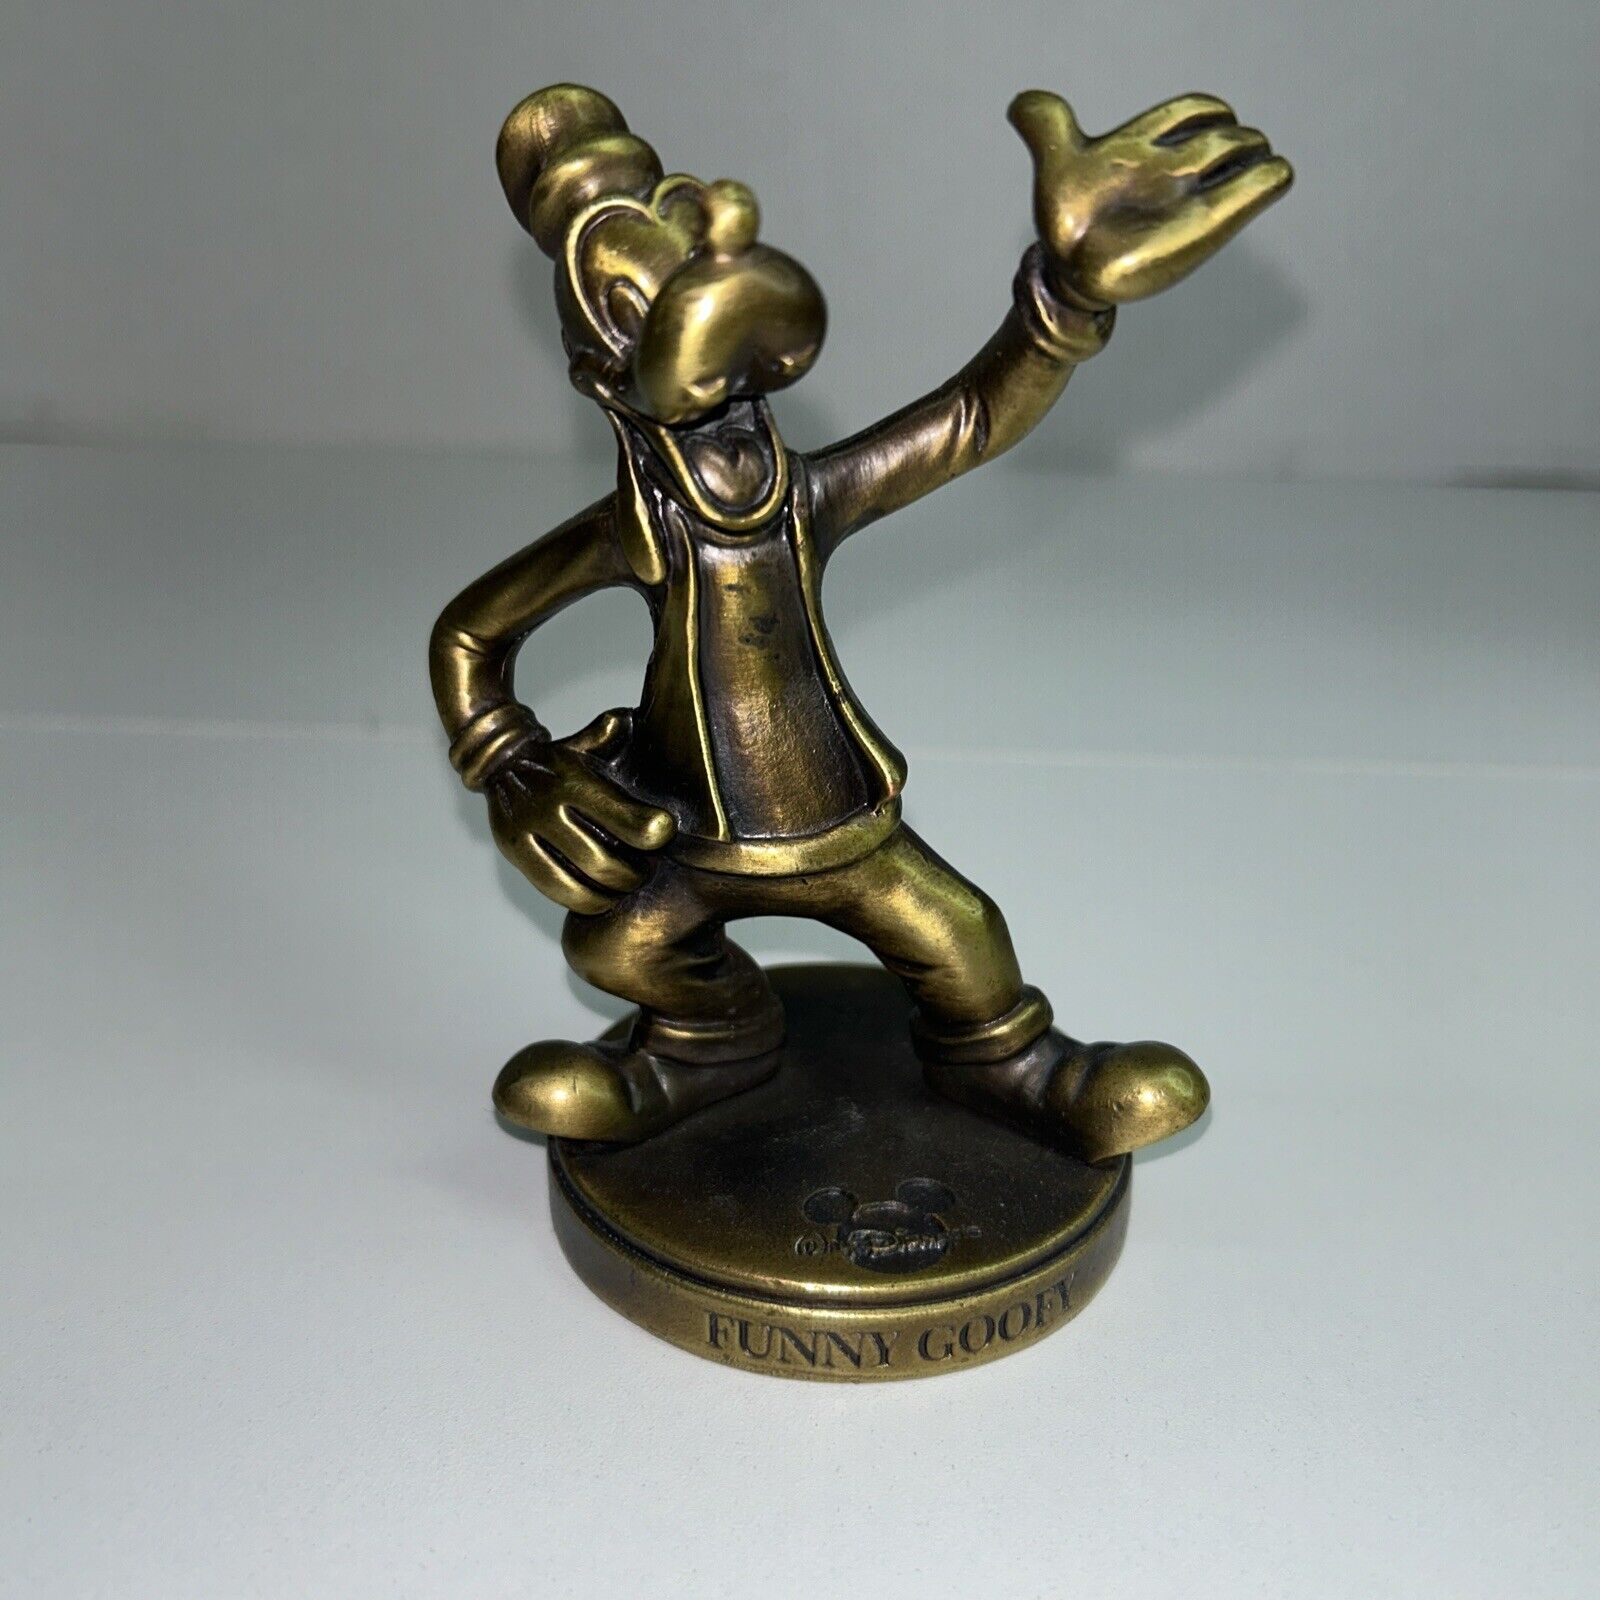 Funny Goofy Bronze Figure Disney Statue